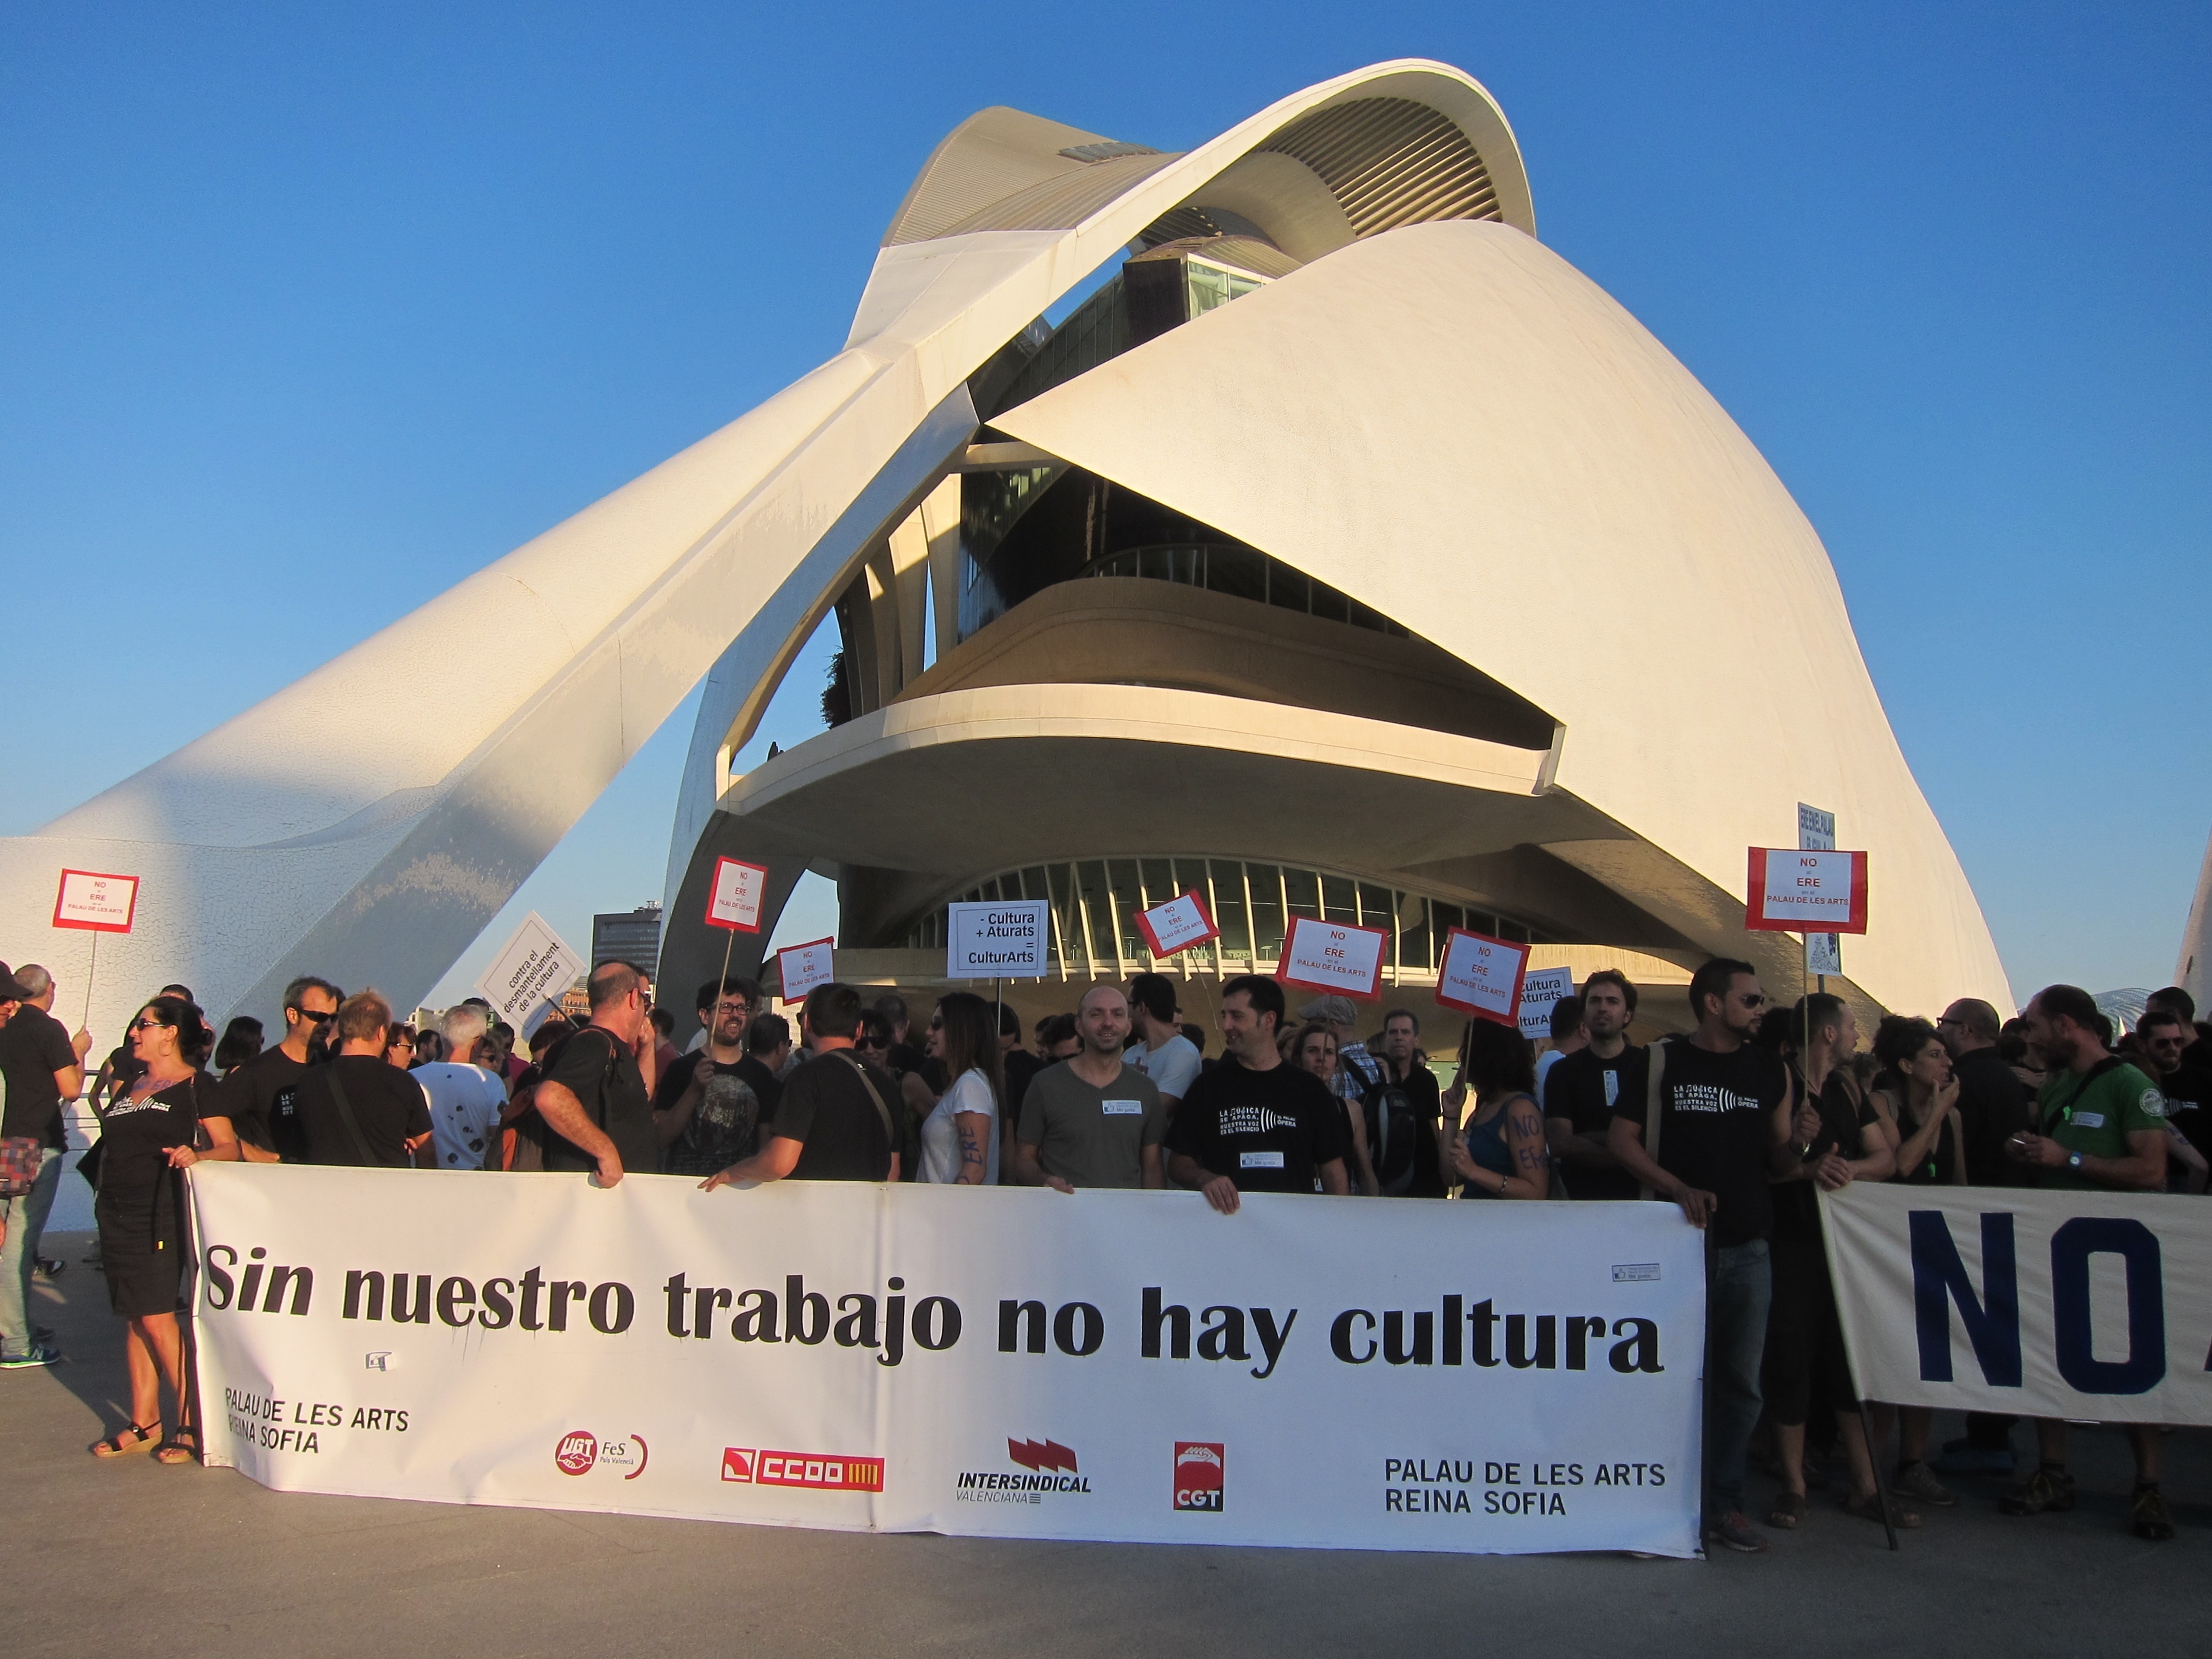 La huelga contra el ERE en el Palau de les Arts paraliza la actividad en el teatro de ópera